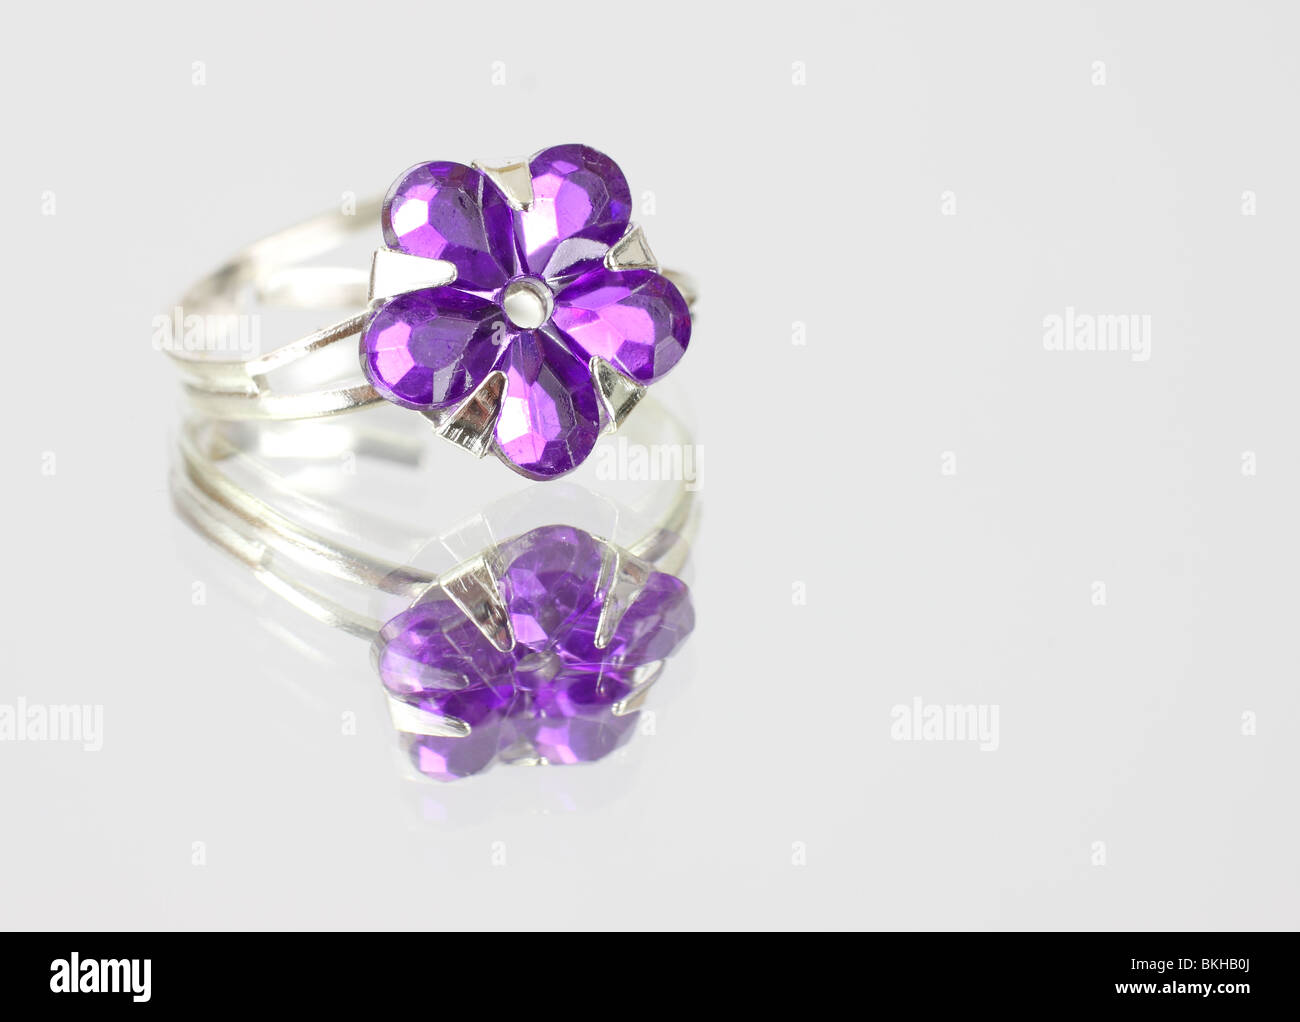 Pretty purple costume jewelry ring on mirrored surface Stock Photo